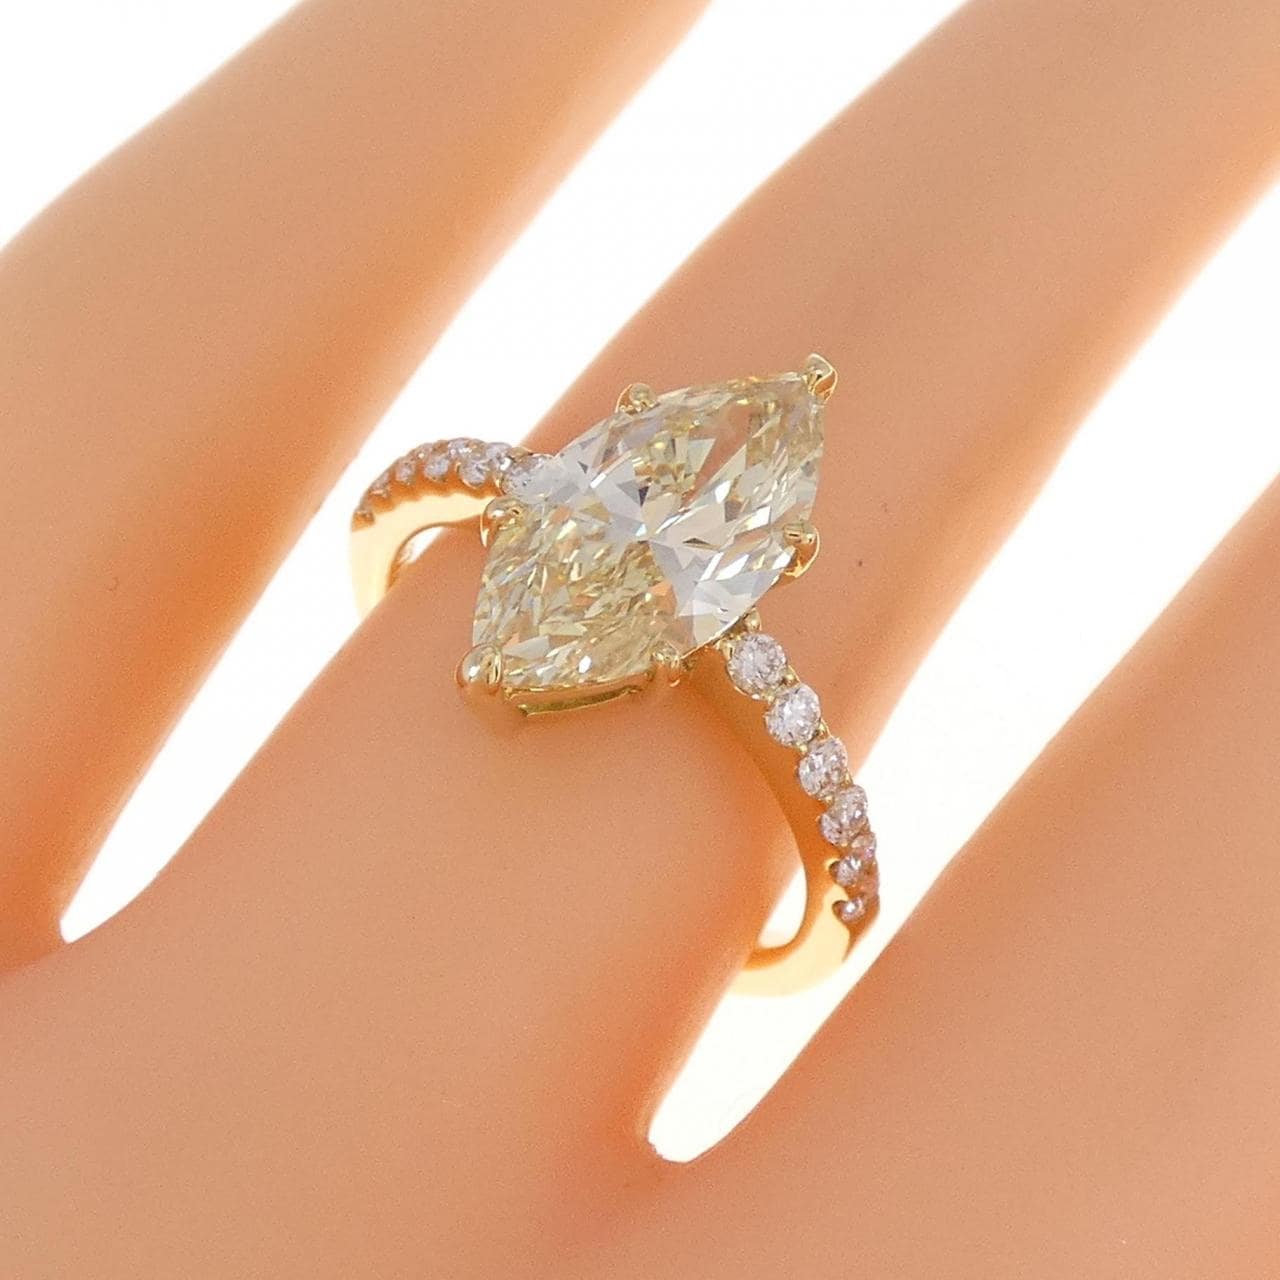 [Remake] K18YG Diamond Ring 2.179CT LY VVS2 Marquise Cut